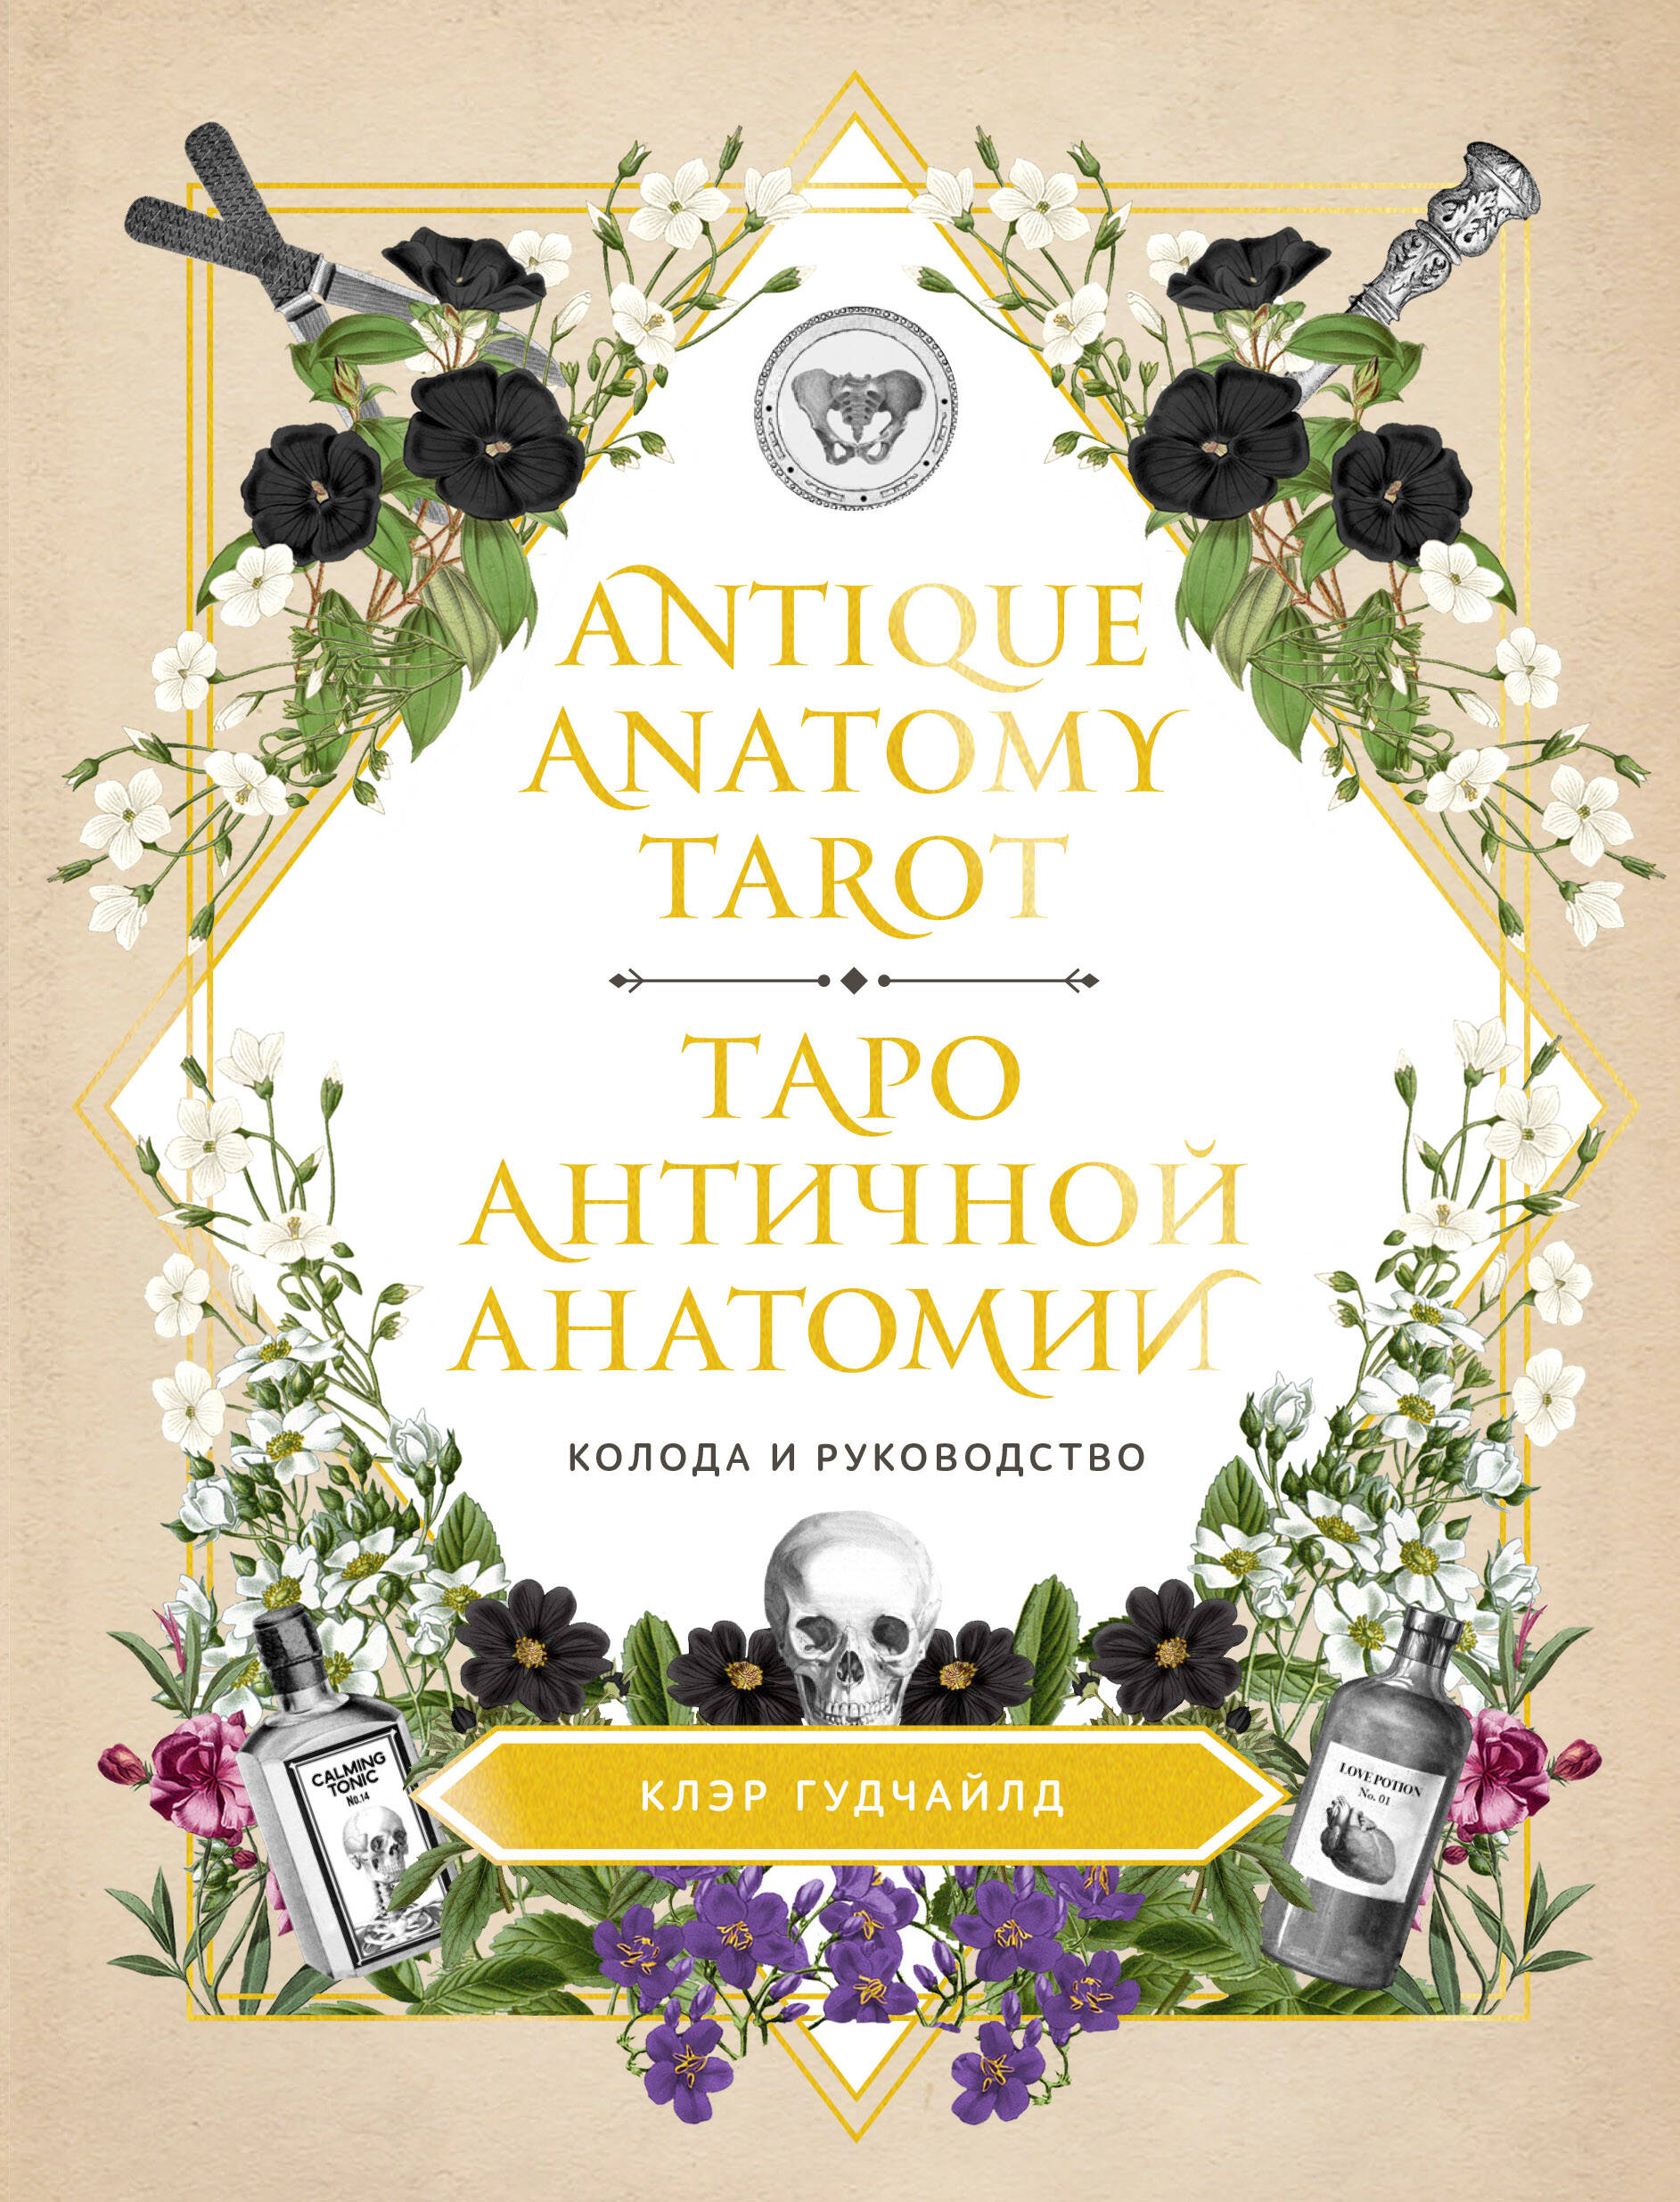 Гудчайлд Клэр Antique Anatomy Tarot. Таро античной анатомии